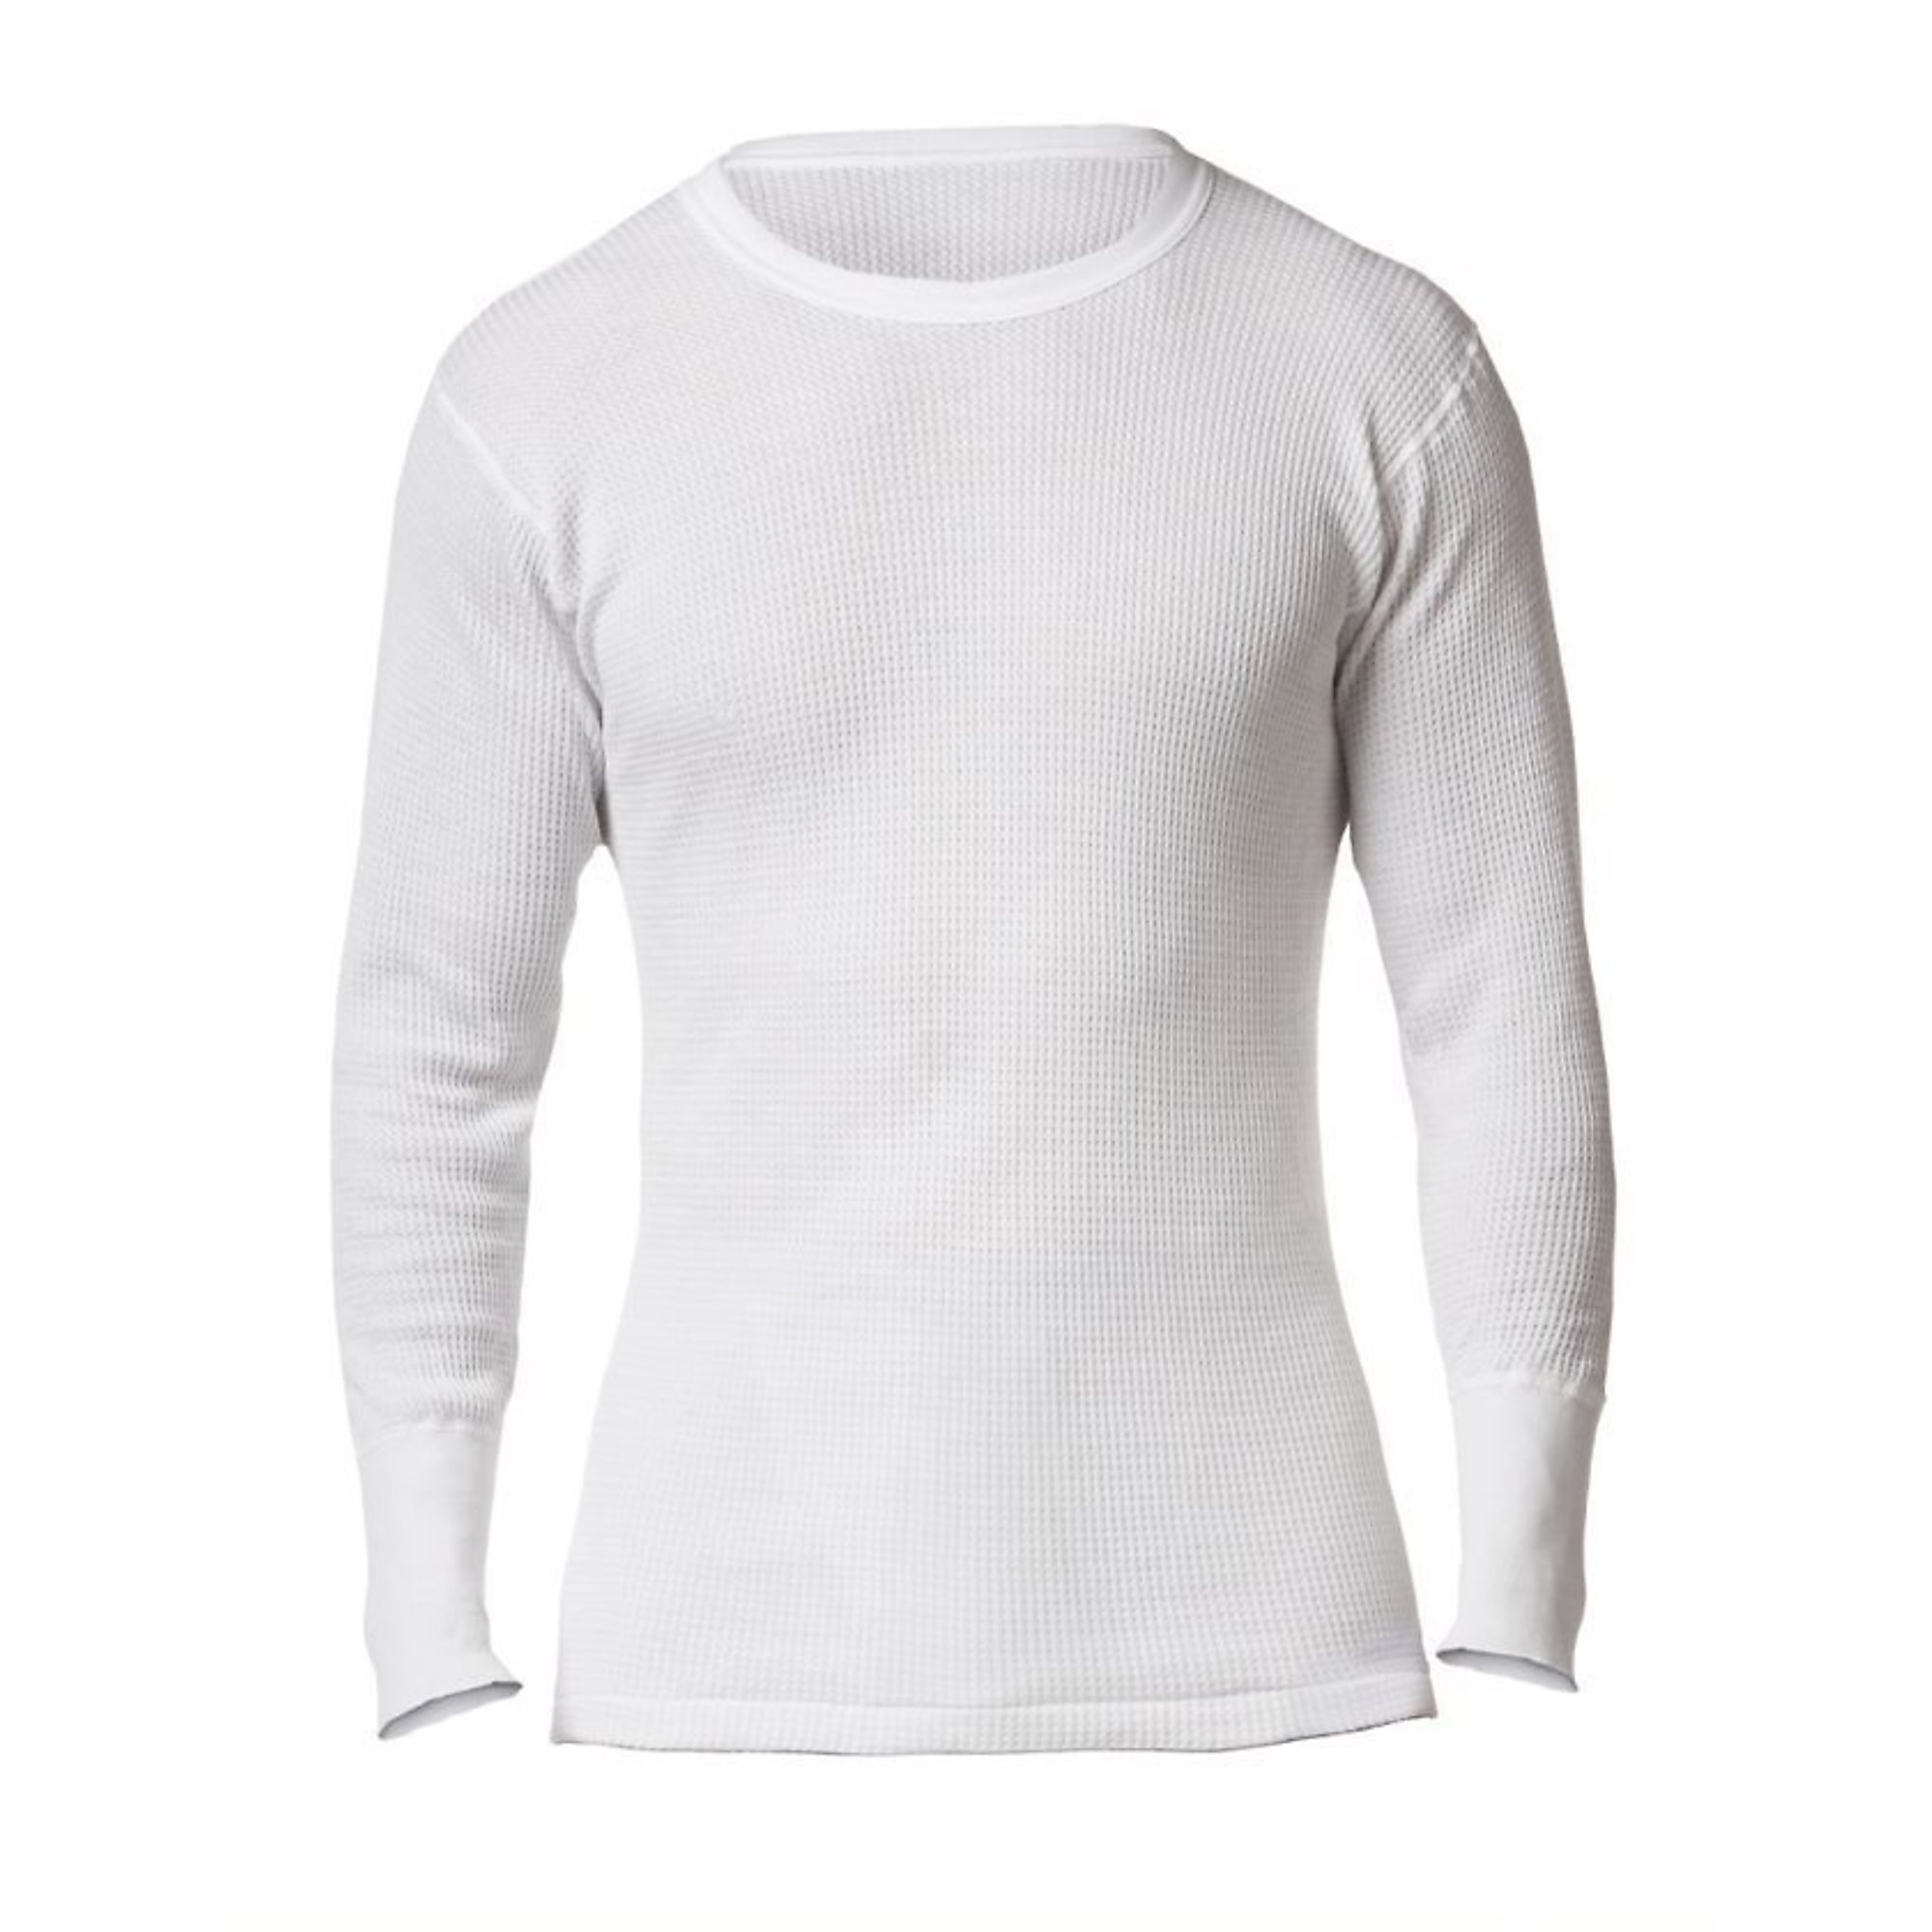 Michigan Adult Women Thermal Waffle Knit Long Sleeve T-Shirt (Size